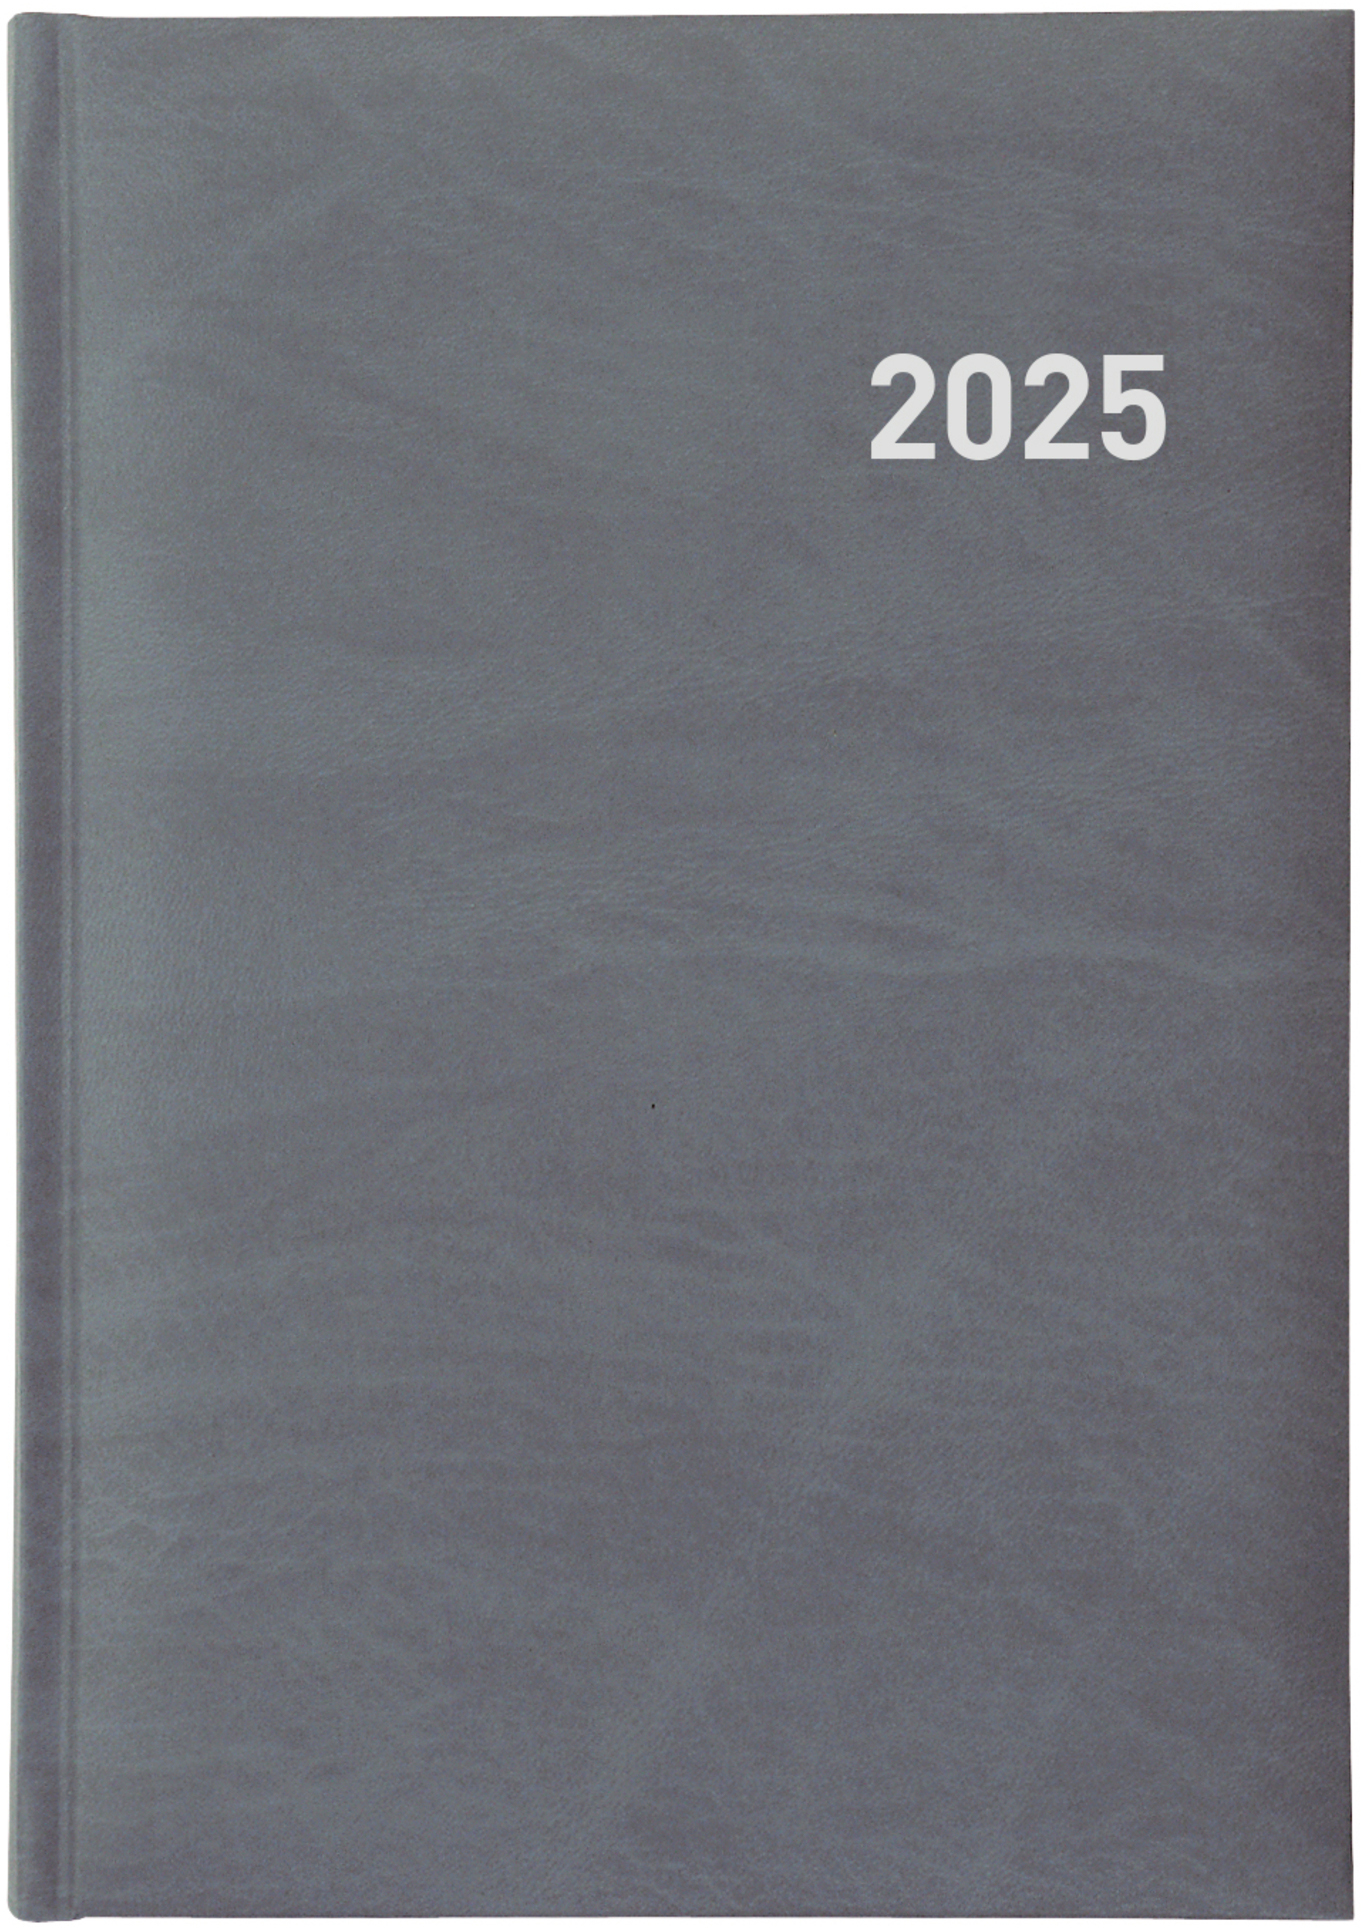 BIELLA Agenda Executive 2025 806510250025 1J/1P gris ML 14.5x20.5cm